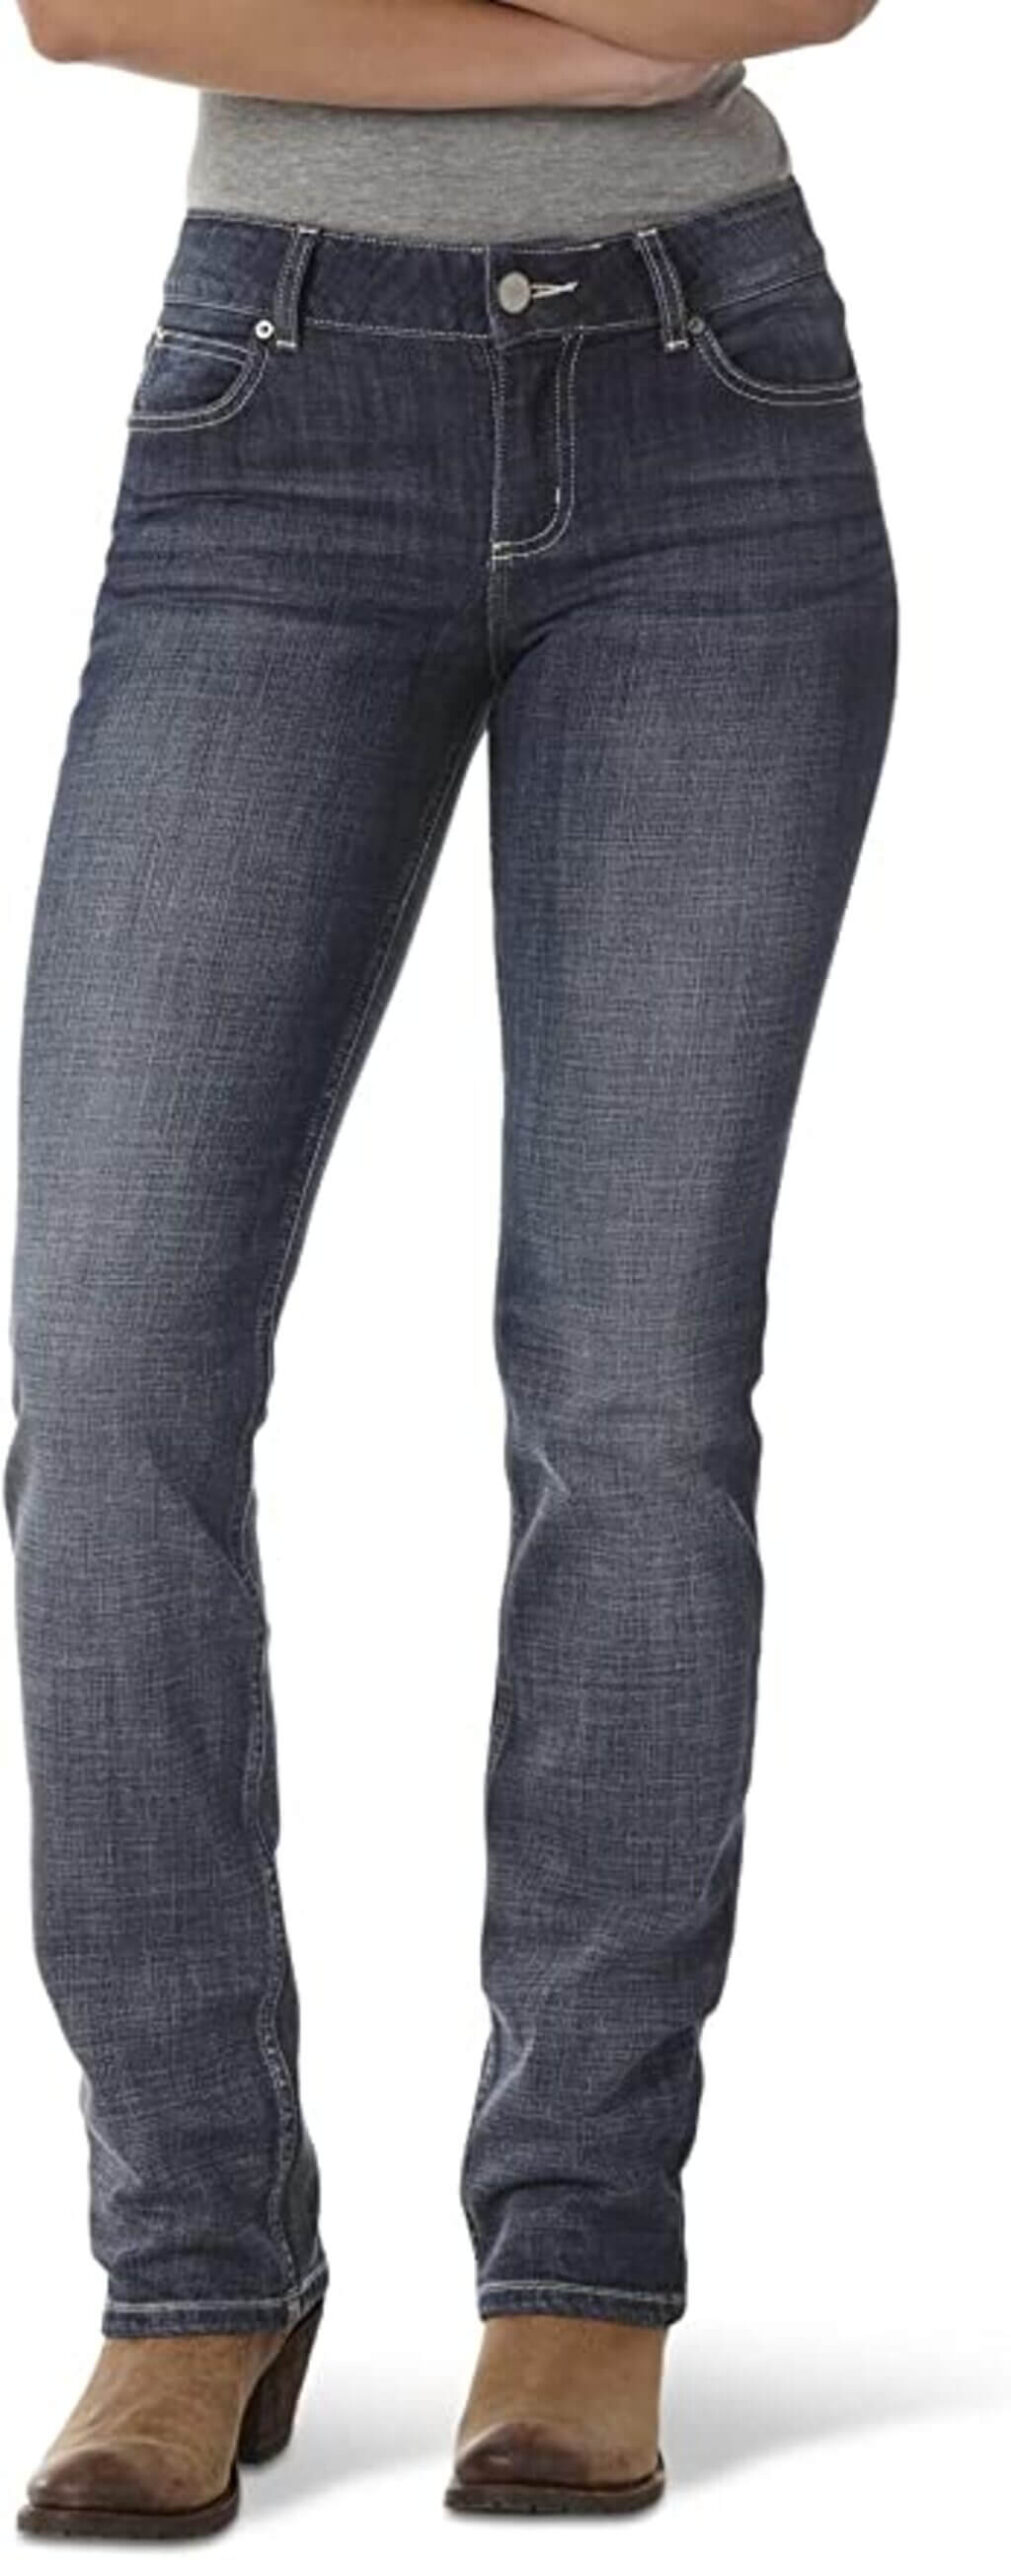 Wrangler Women's Western Mid Rise Stretch Straight Leg Jean